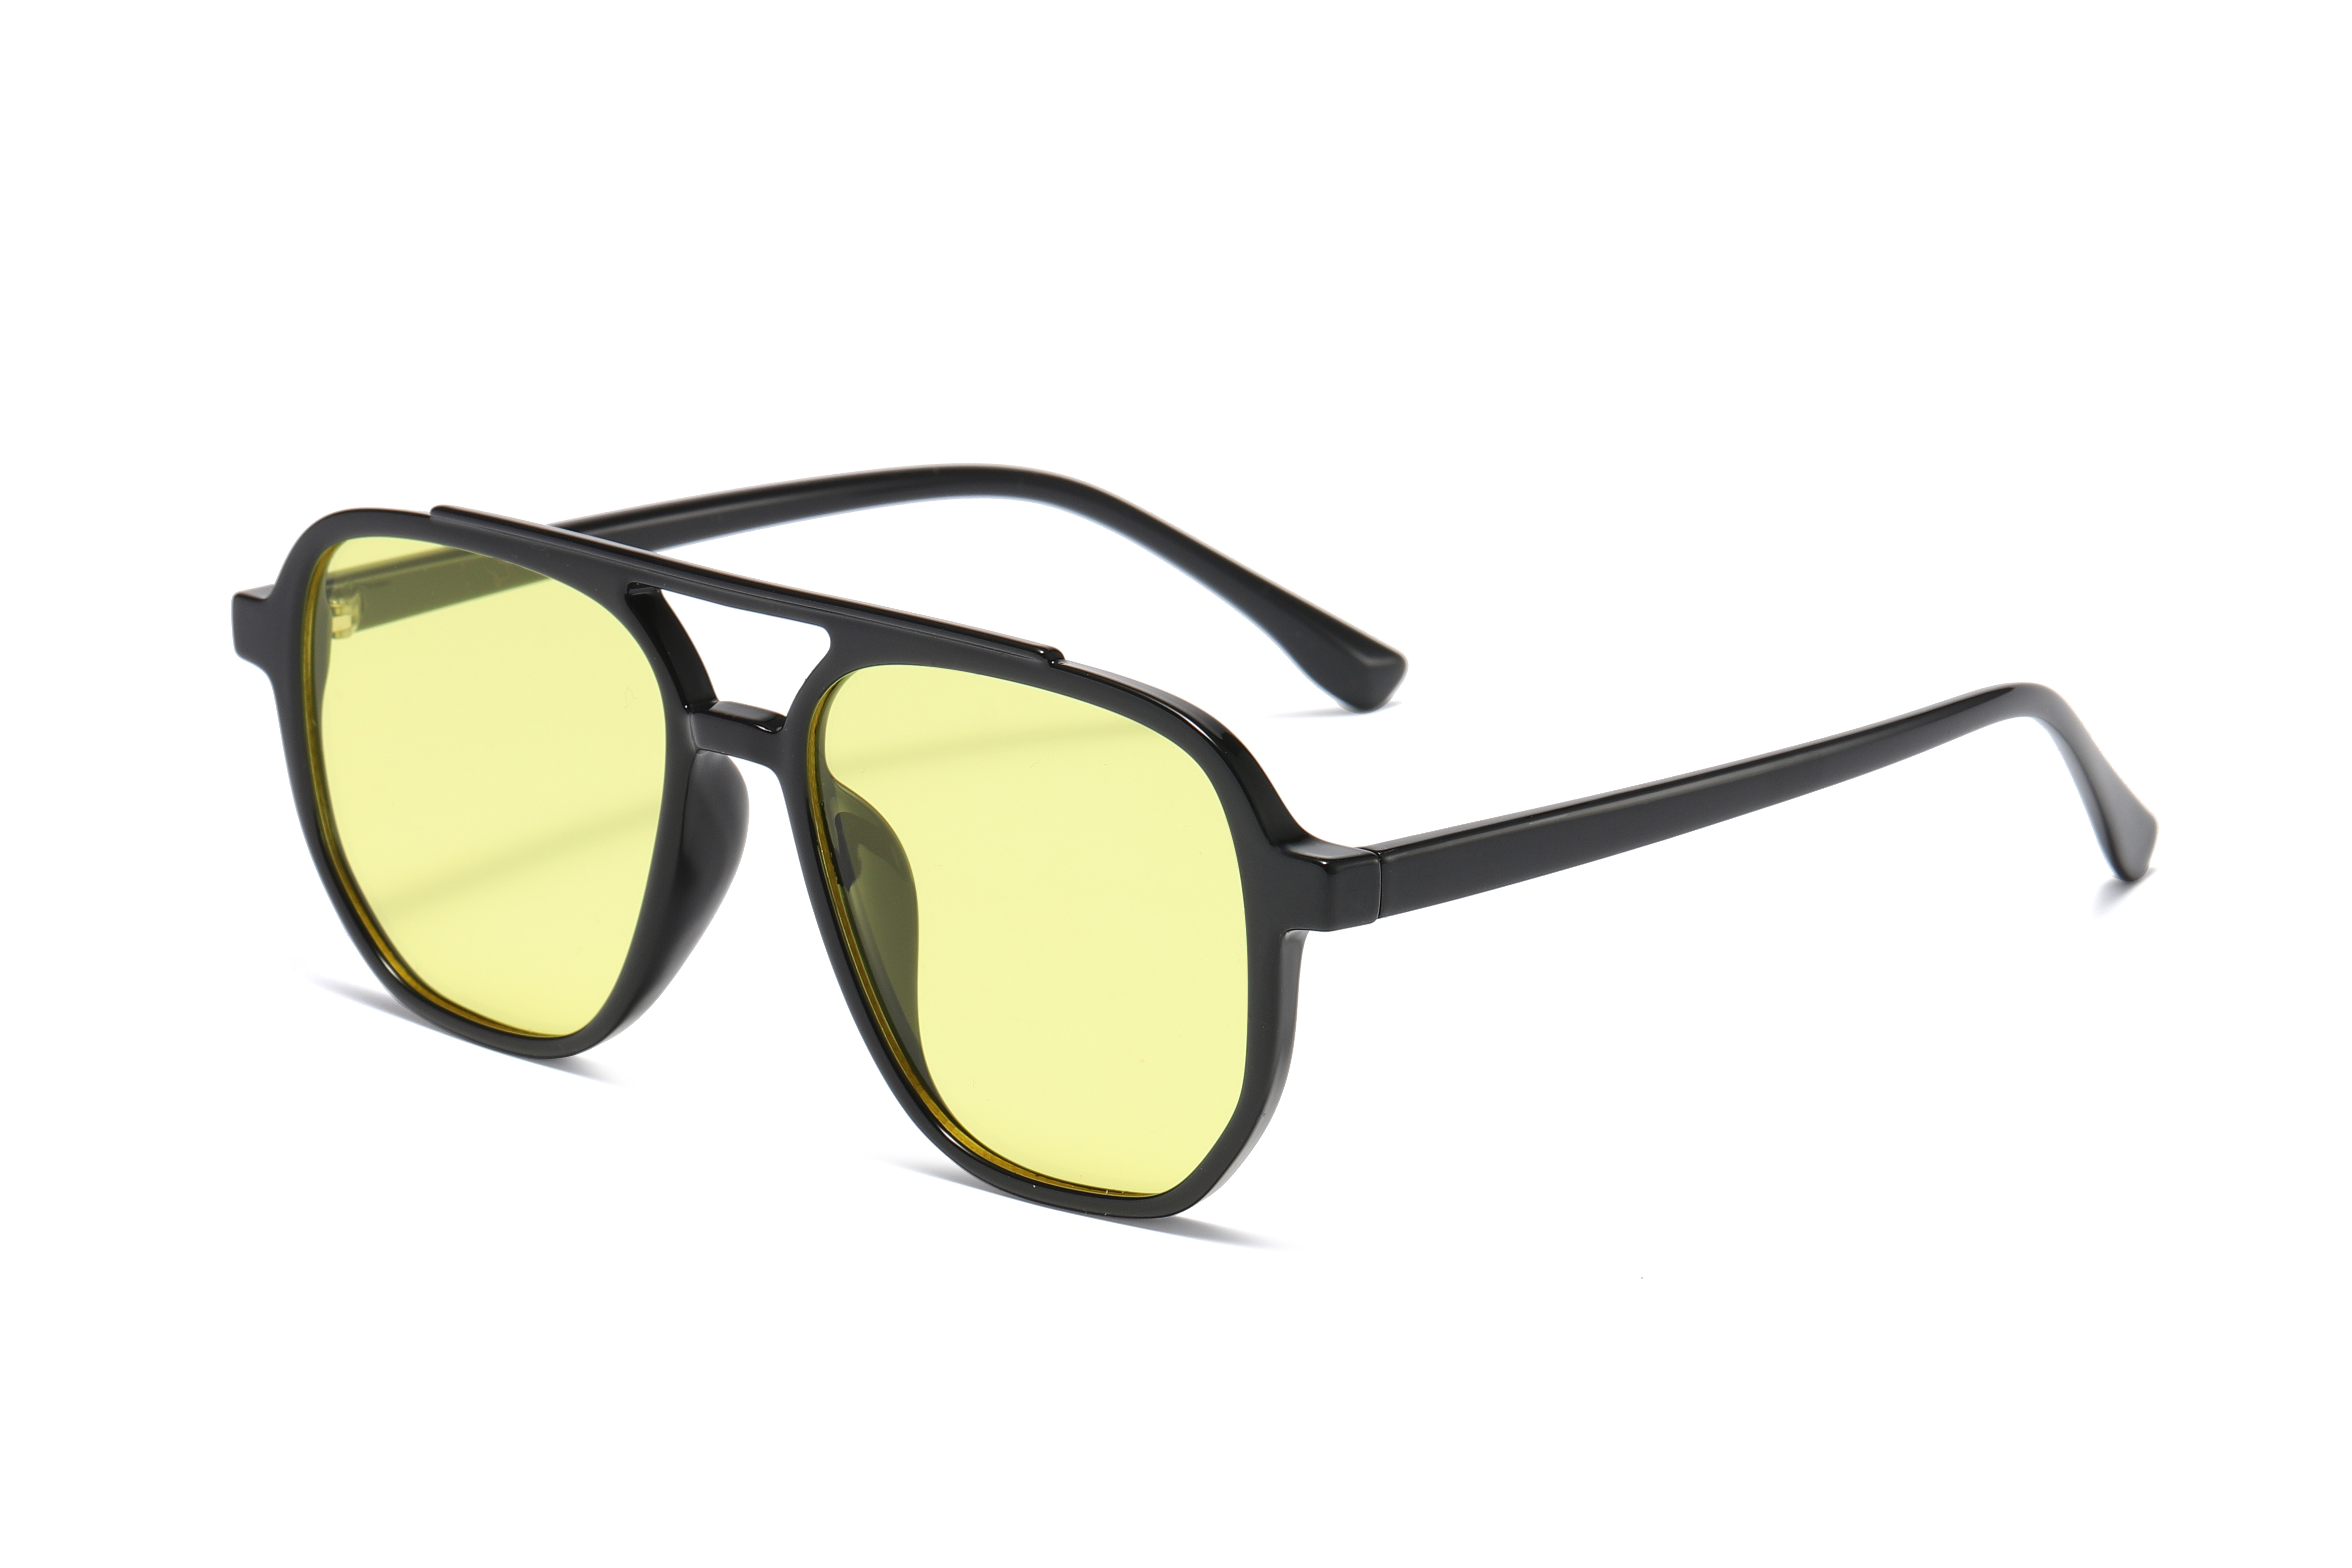 Double Bridge Fashion Sunglasses 81793